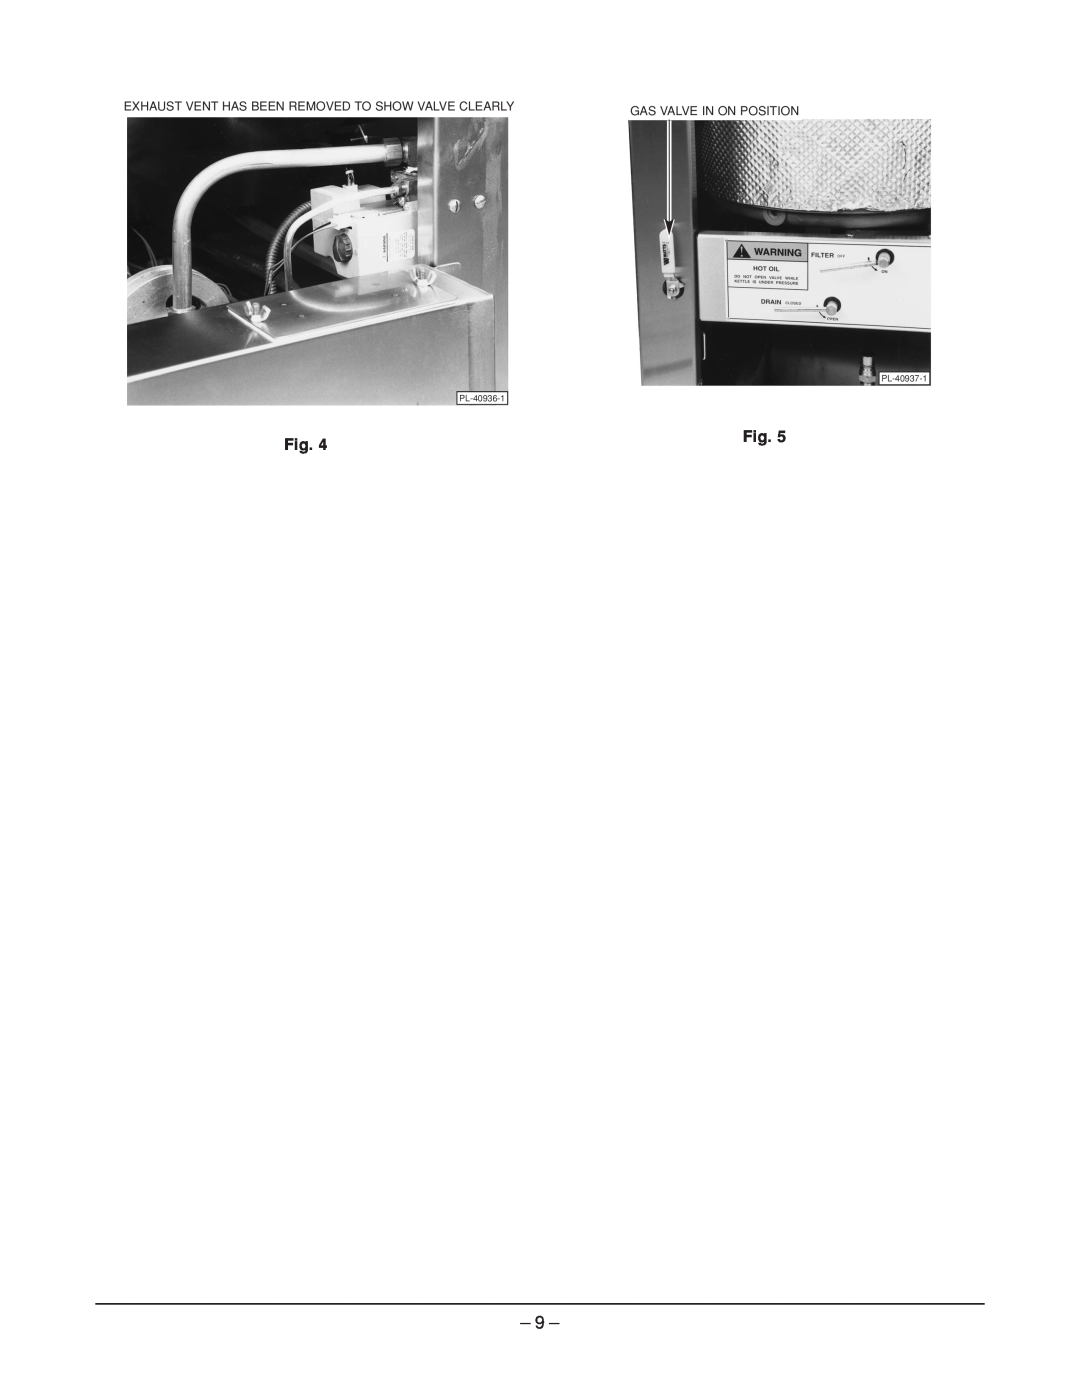 Hobart HPGF15 manual Gas Valve In On Position, PL-40937-1 PL-40936-1 